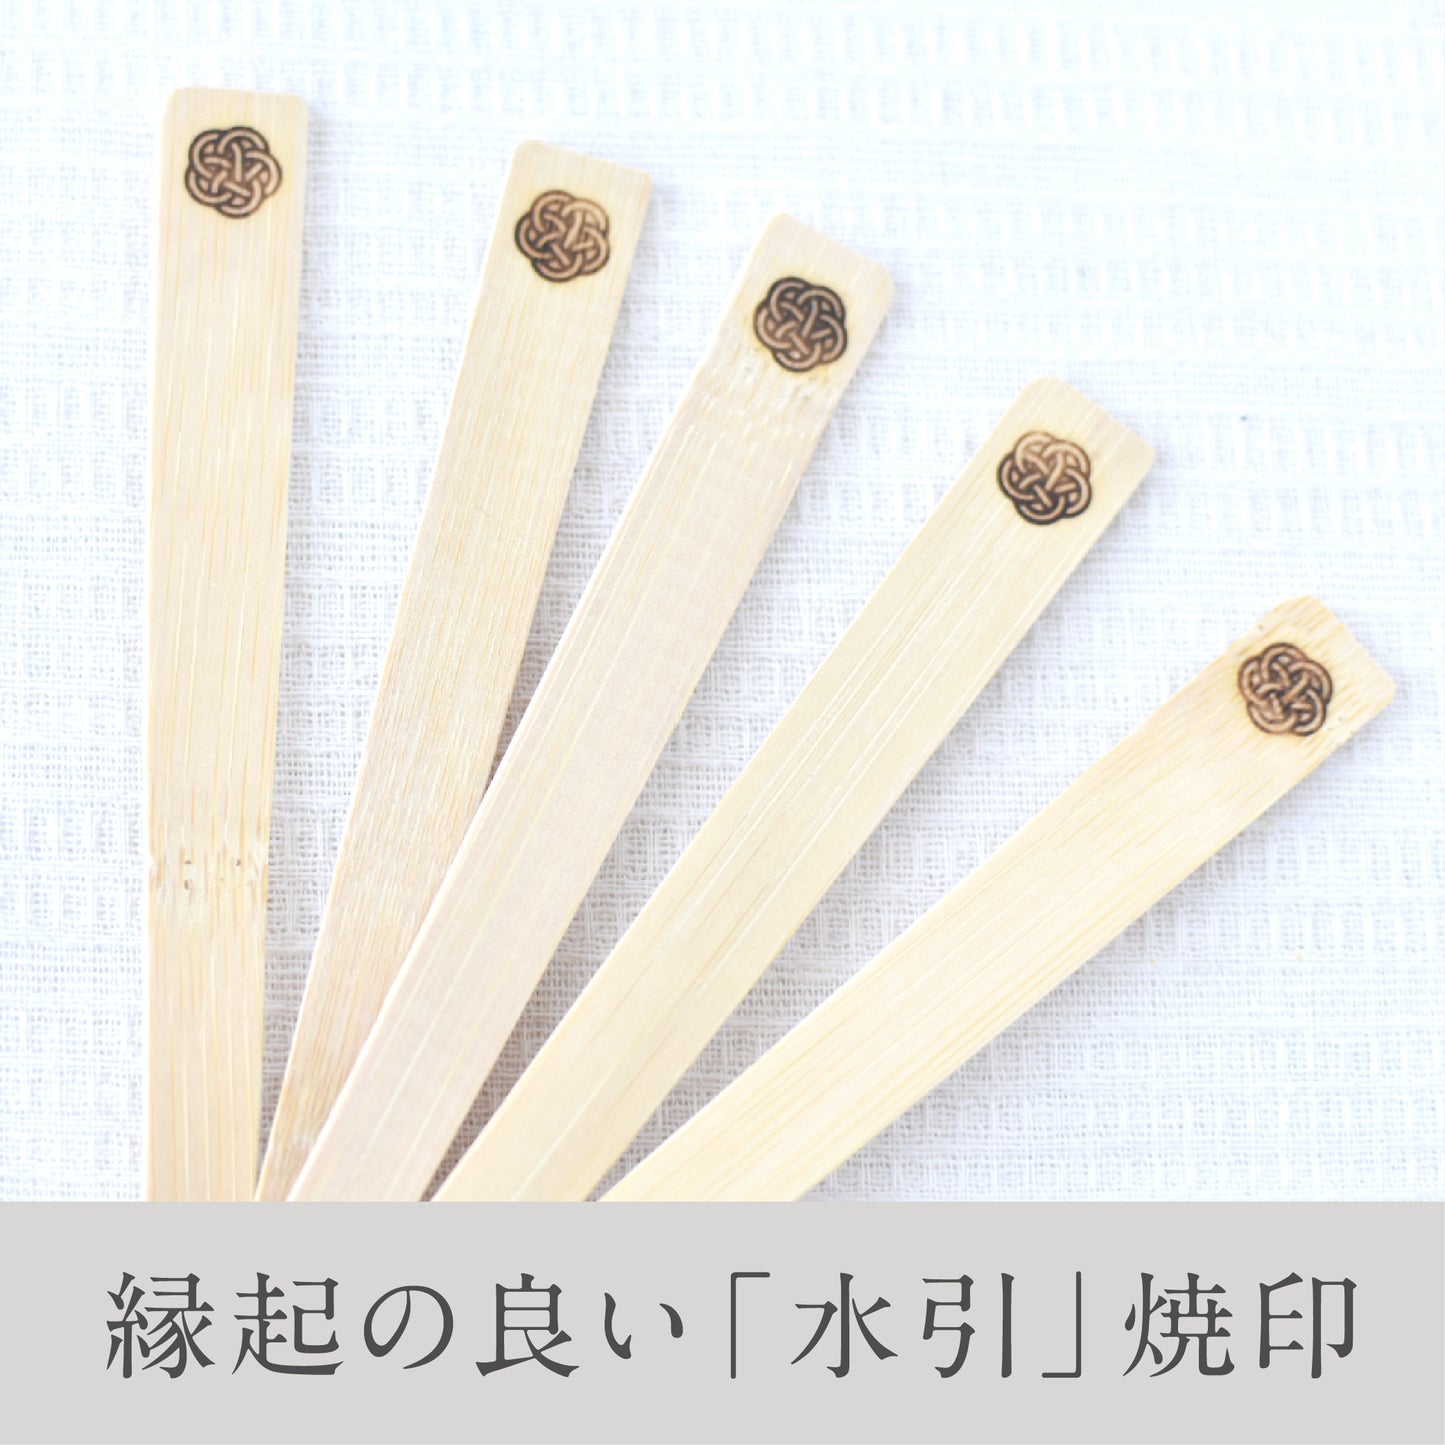 zaryu（ザリュー）おしゃれな竹使い捨てフォーク【送料250円可能】